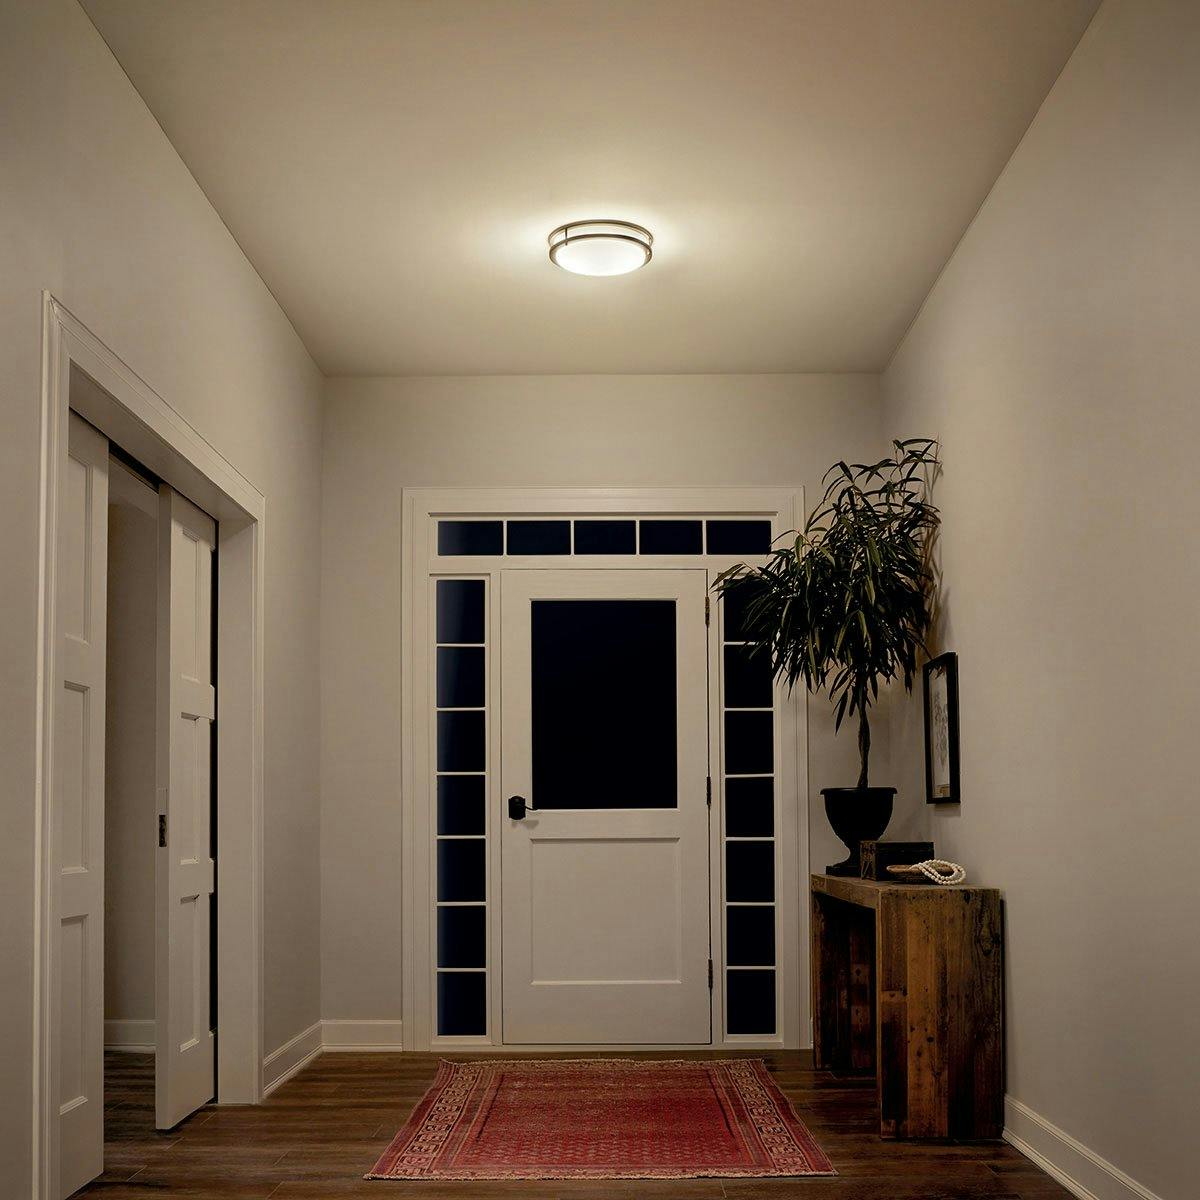 Night time Hallway image featuring Avon flush mount light 10769NILED